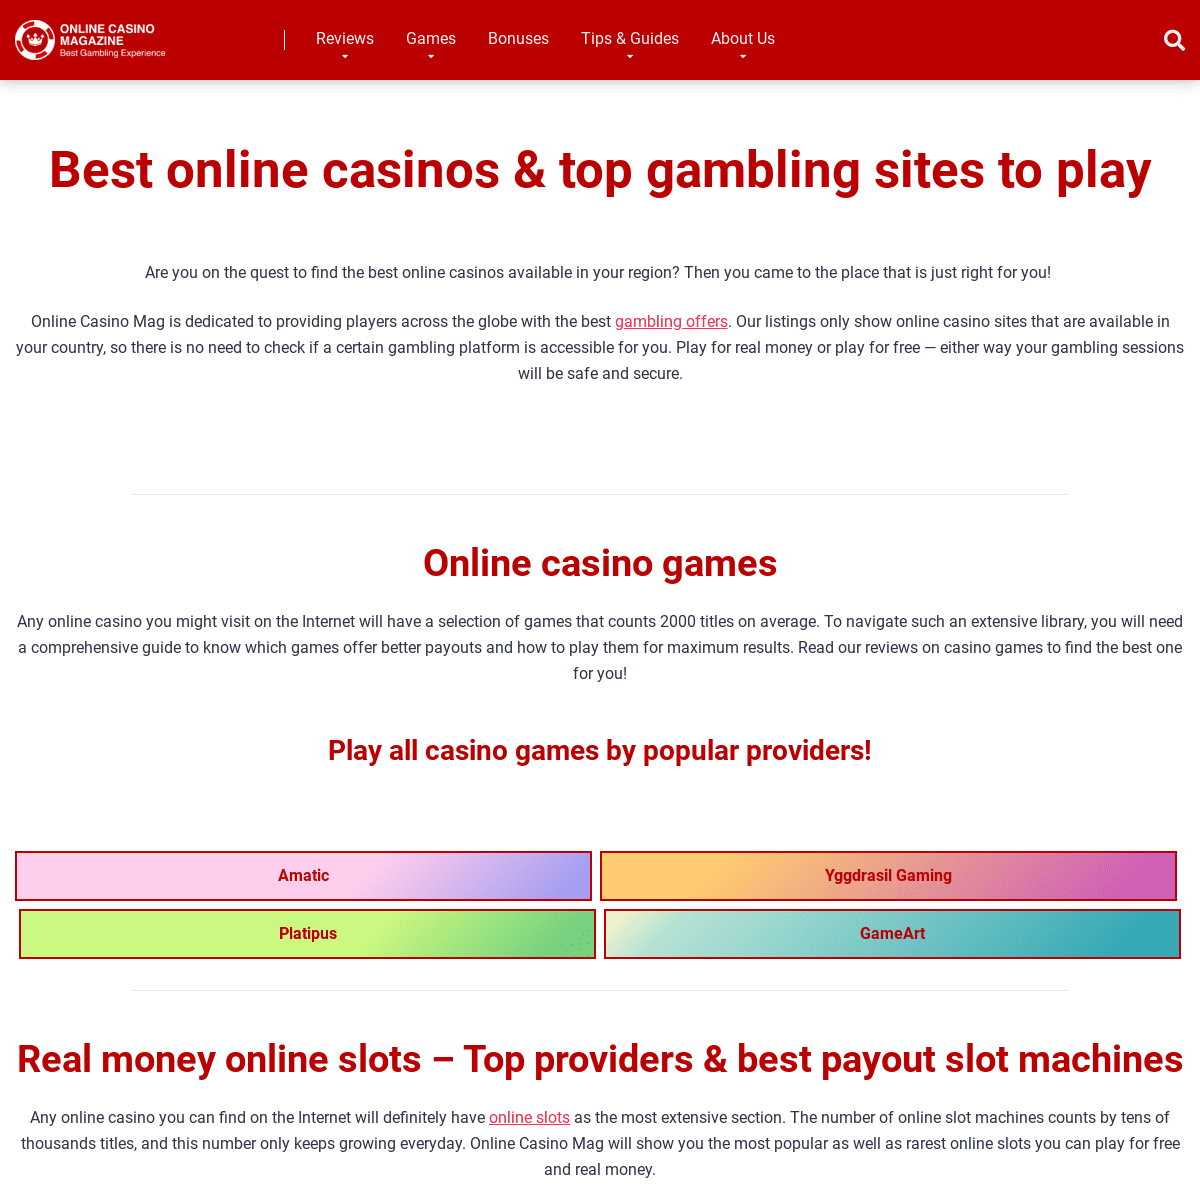 Online Casino Magazine â¤ï¸ Best Gambling Experience